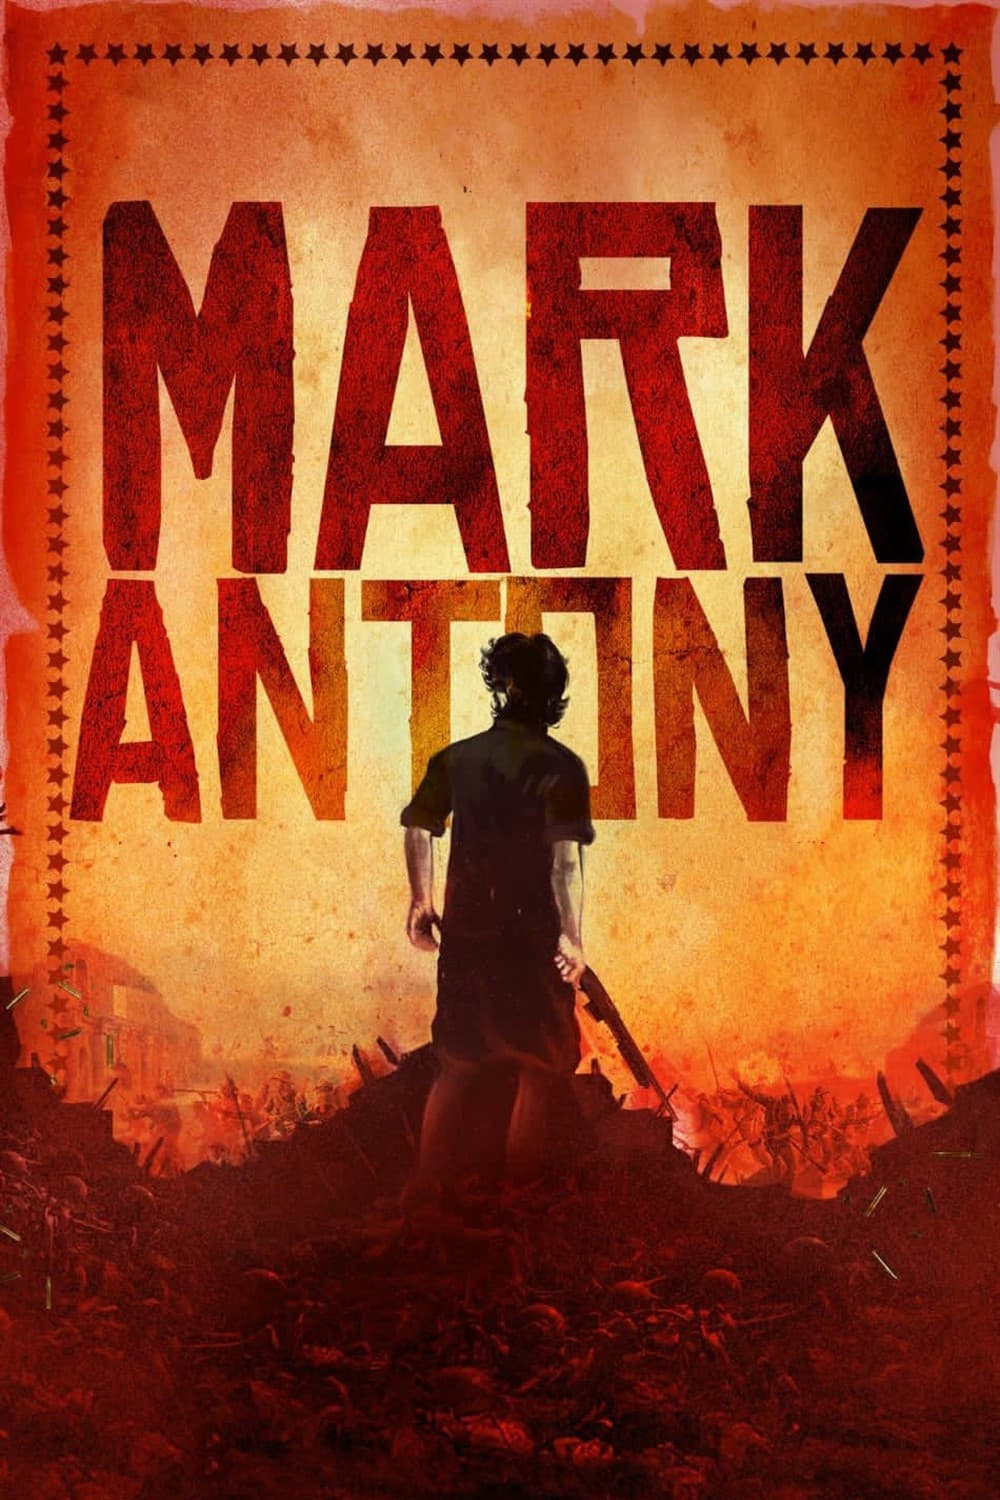 Poster for the movie "Mark Antony"